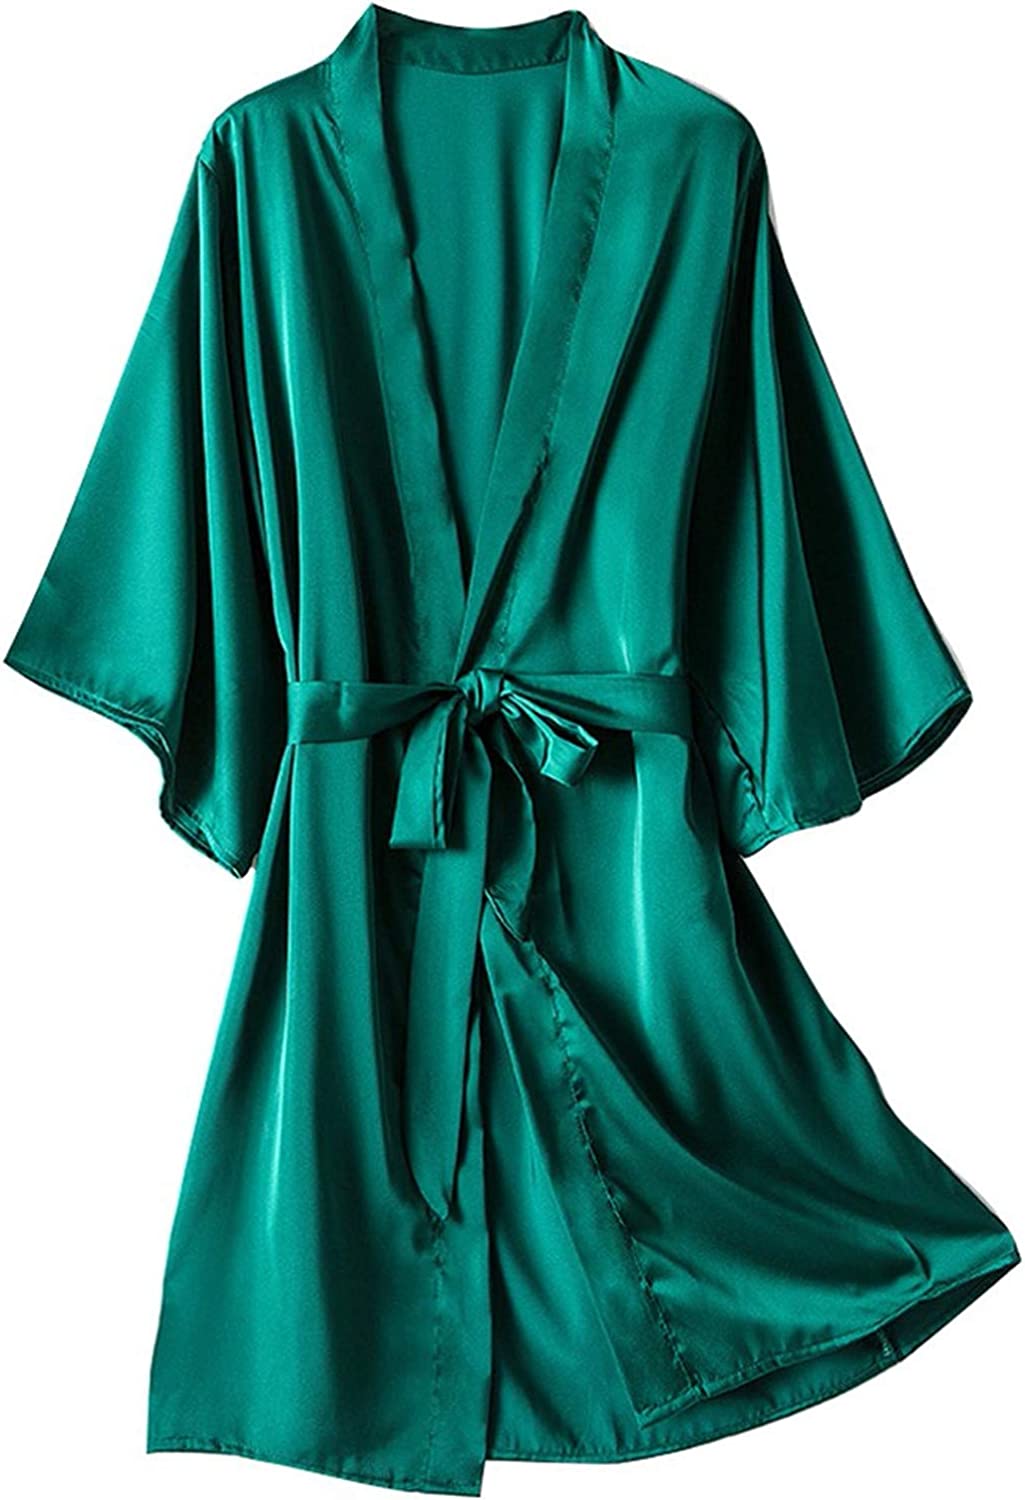 Womens Satin Kimono Robes Silk Short Bridesmaid Robe Lingerie Dressing Gown Bathrobe Nightgown Sleepwear